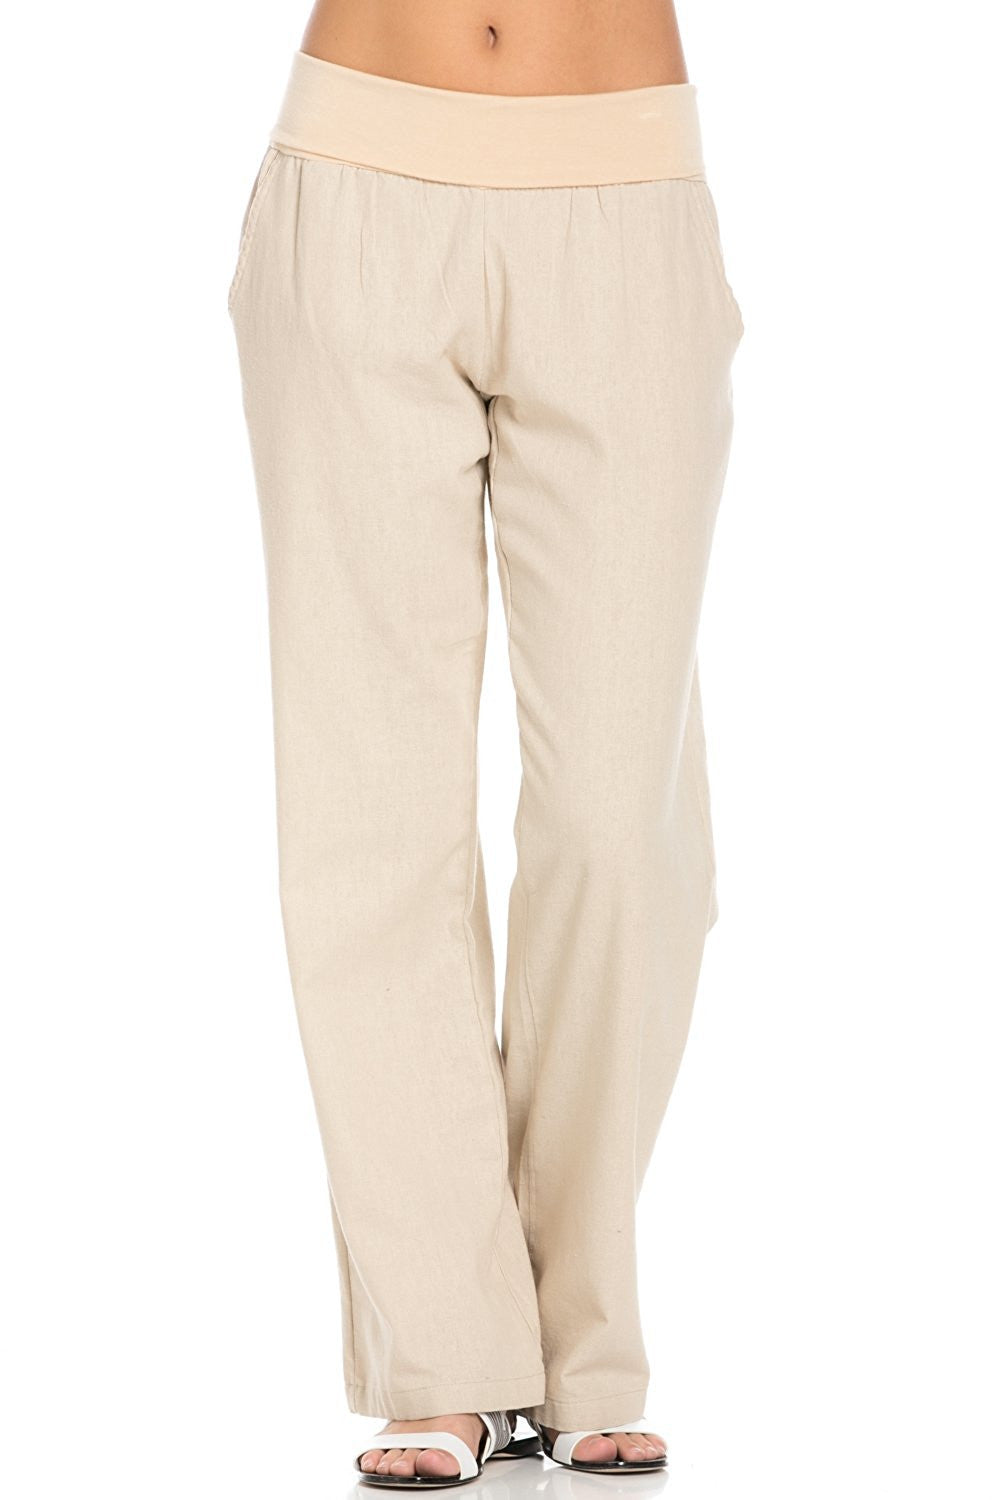 Poplooks Women's Comfy Fold Over Linen Pants (Natural)